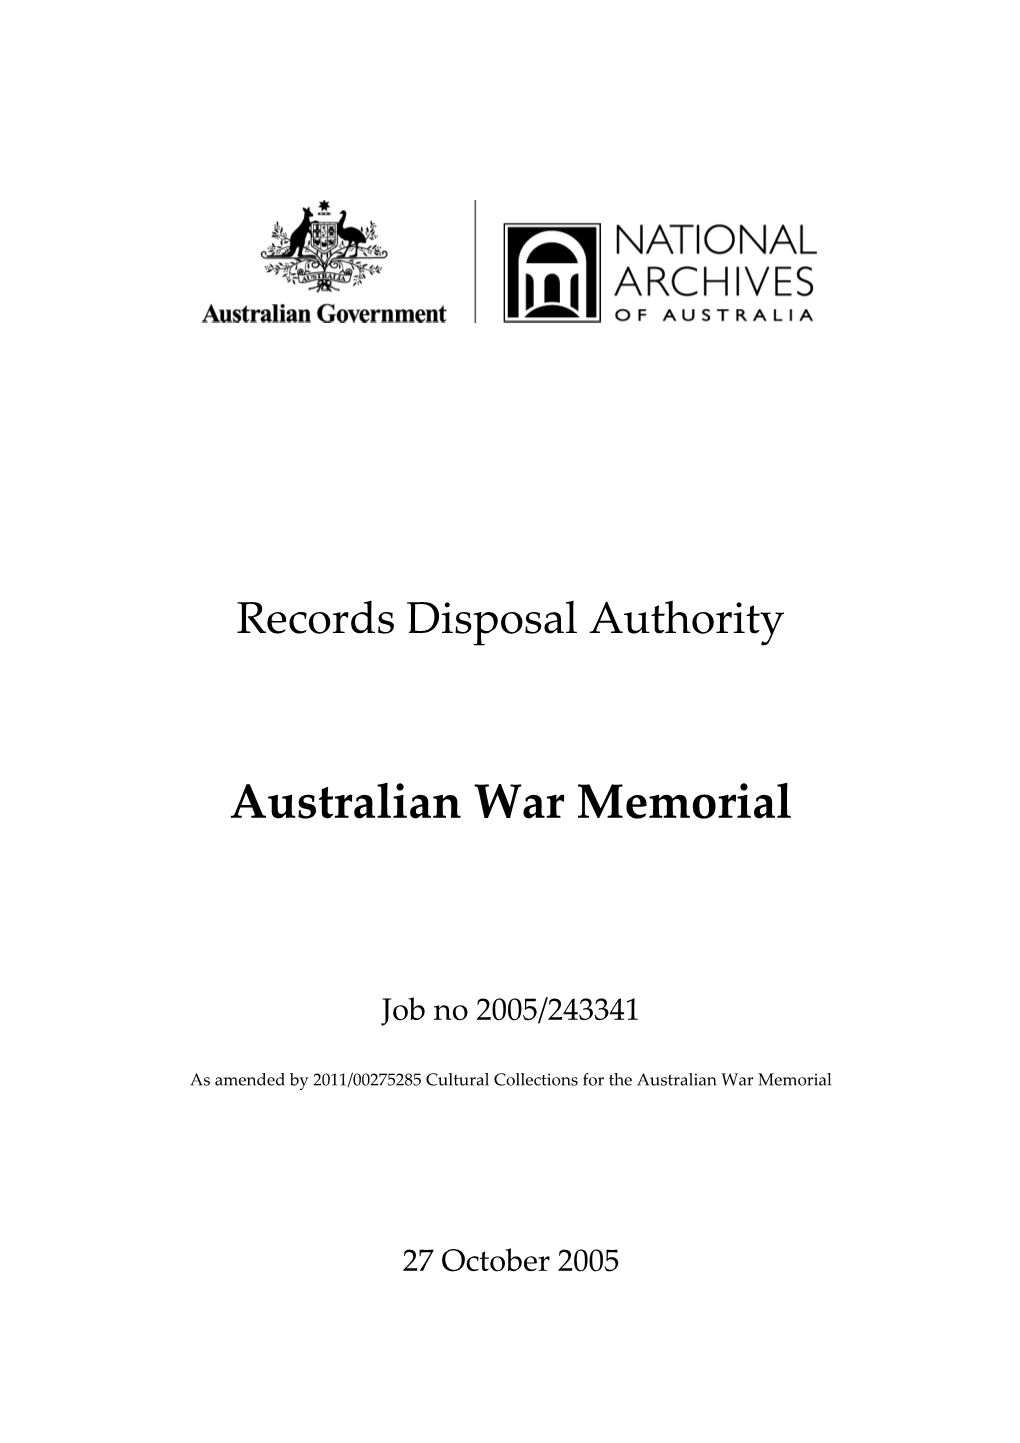 Australian War Memorial (AWM) Records Disposal Authority 2011/00275285